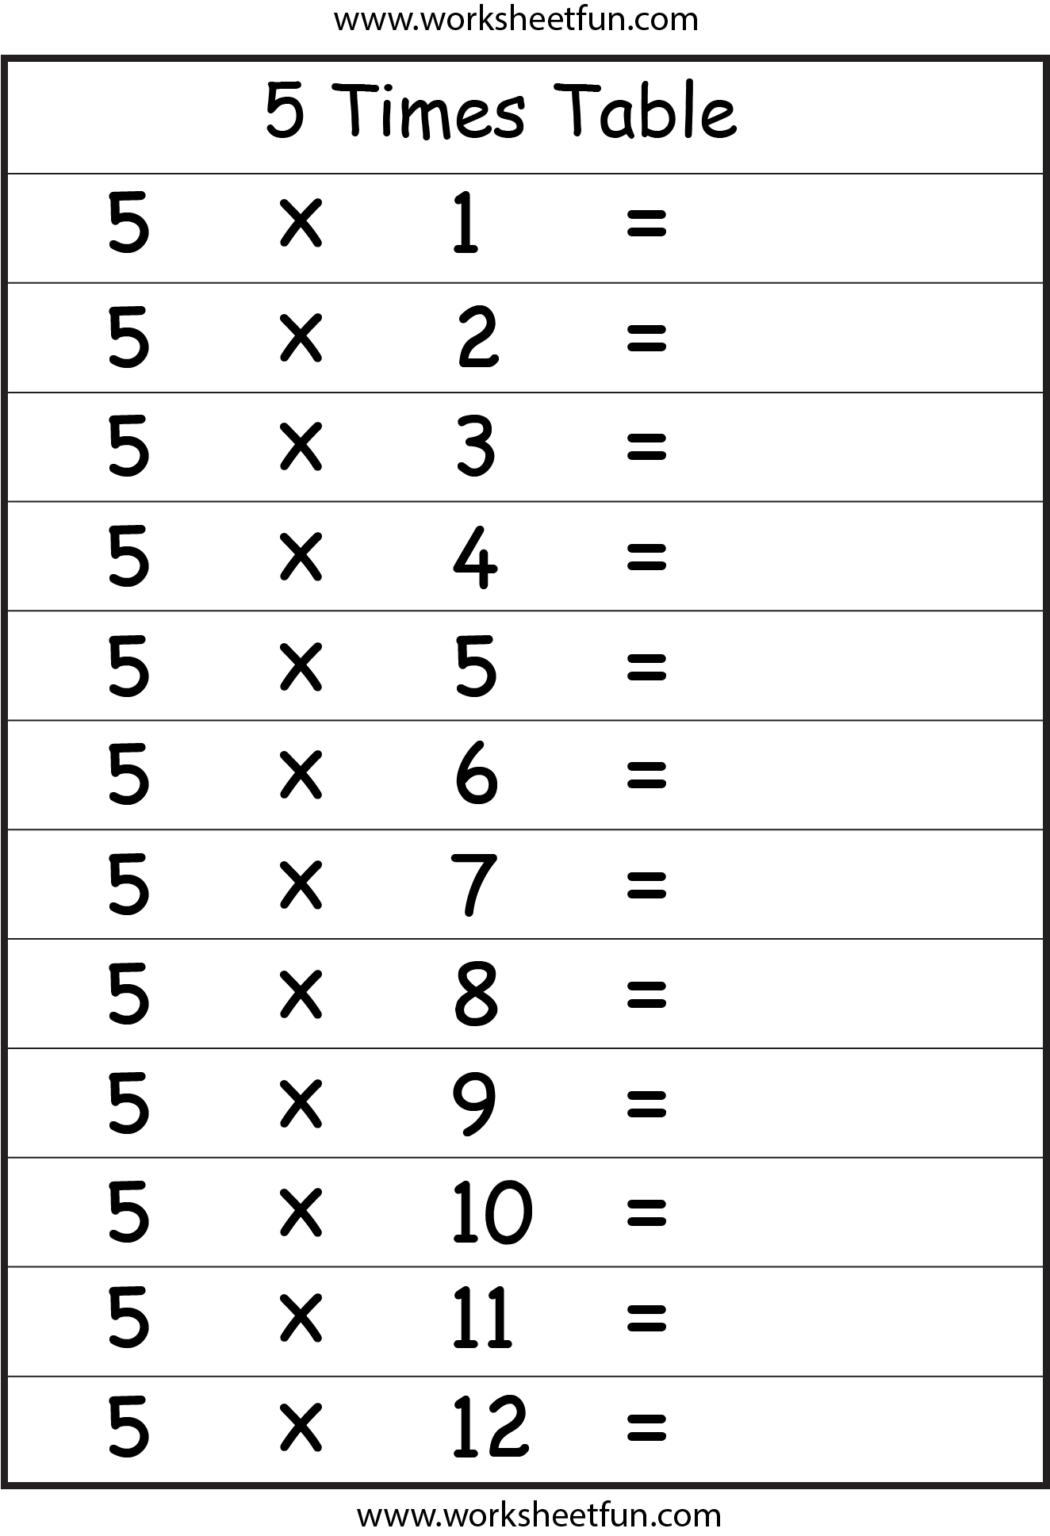 multiplication-times-tables-worksheets-2-3-4-5-6-7-8